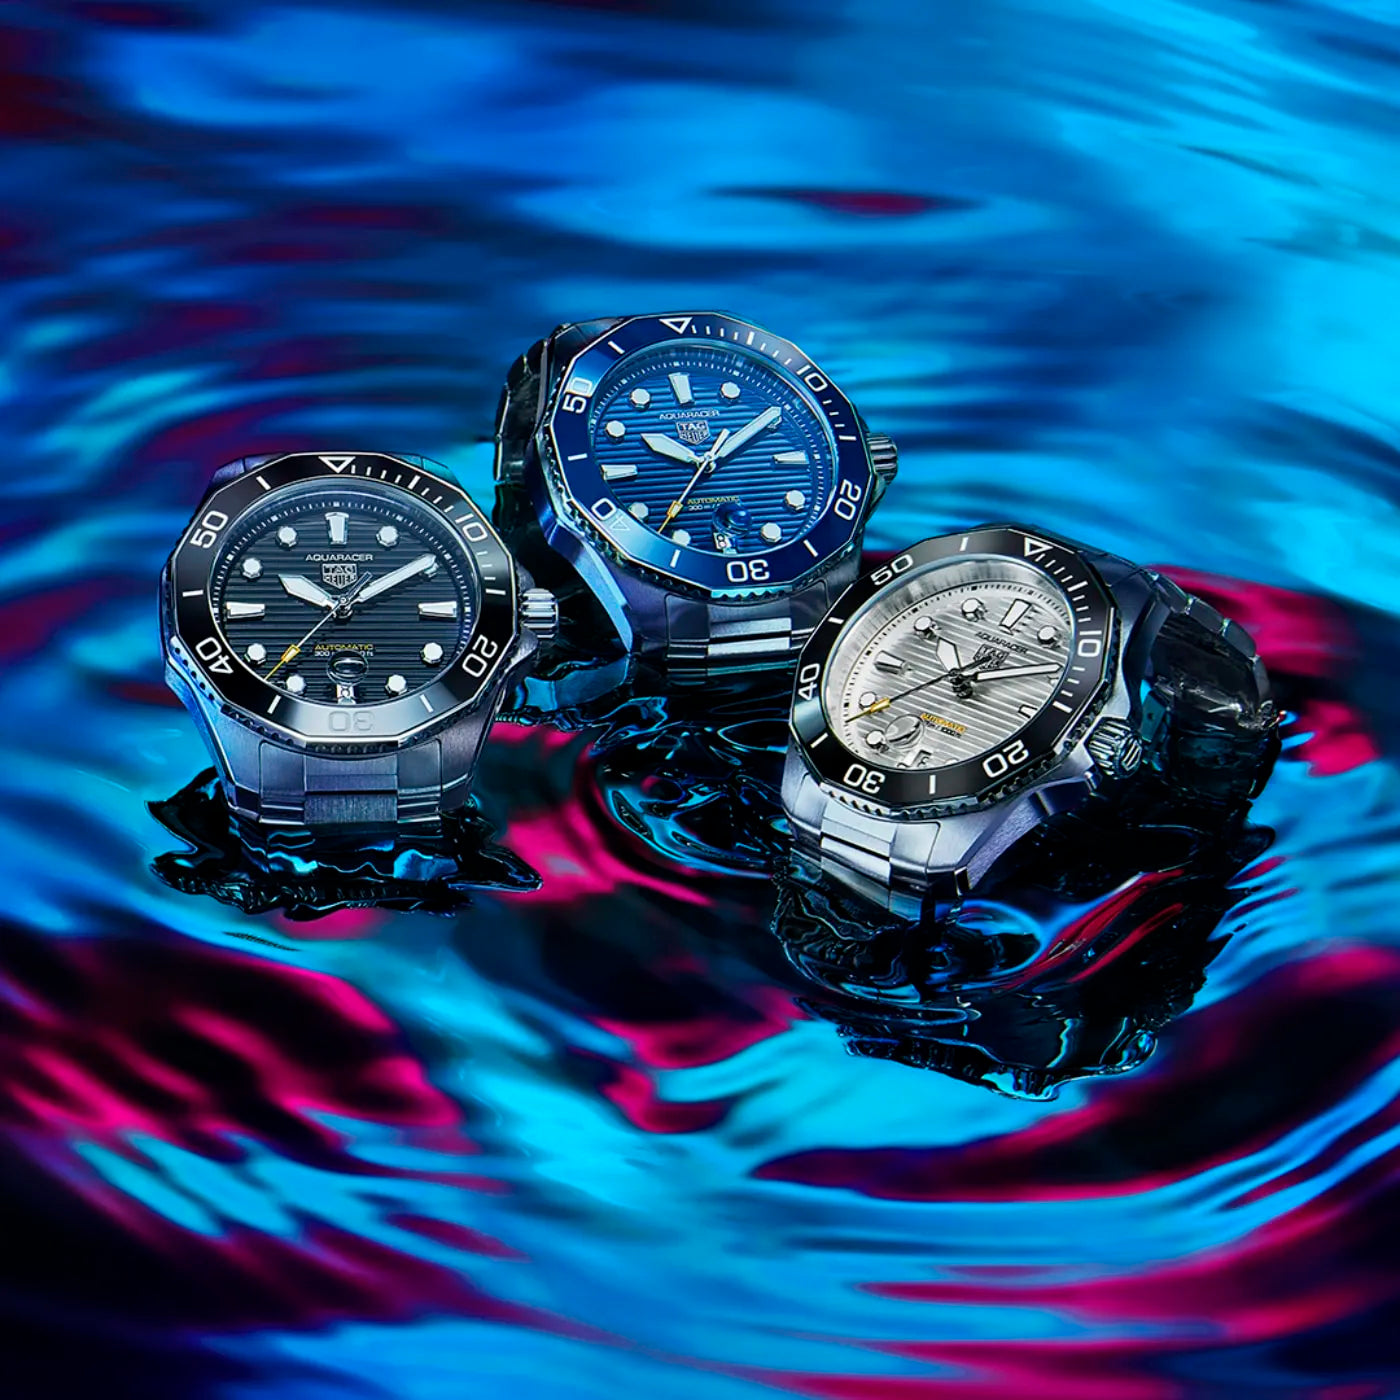 Luxury timepieces